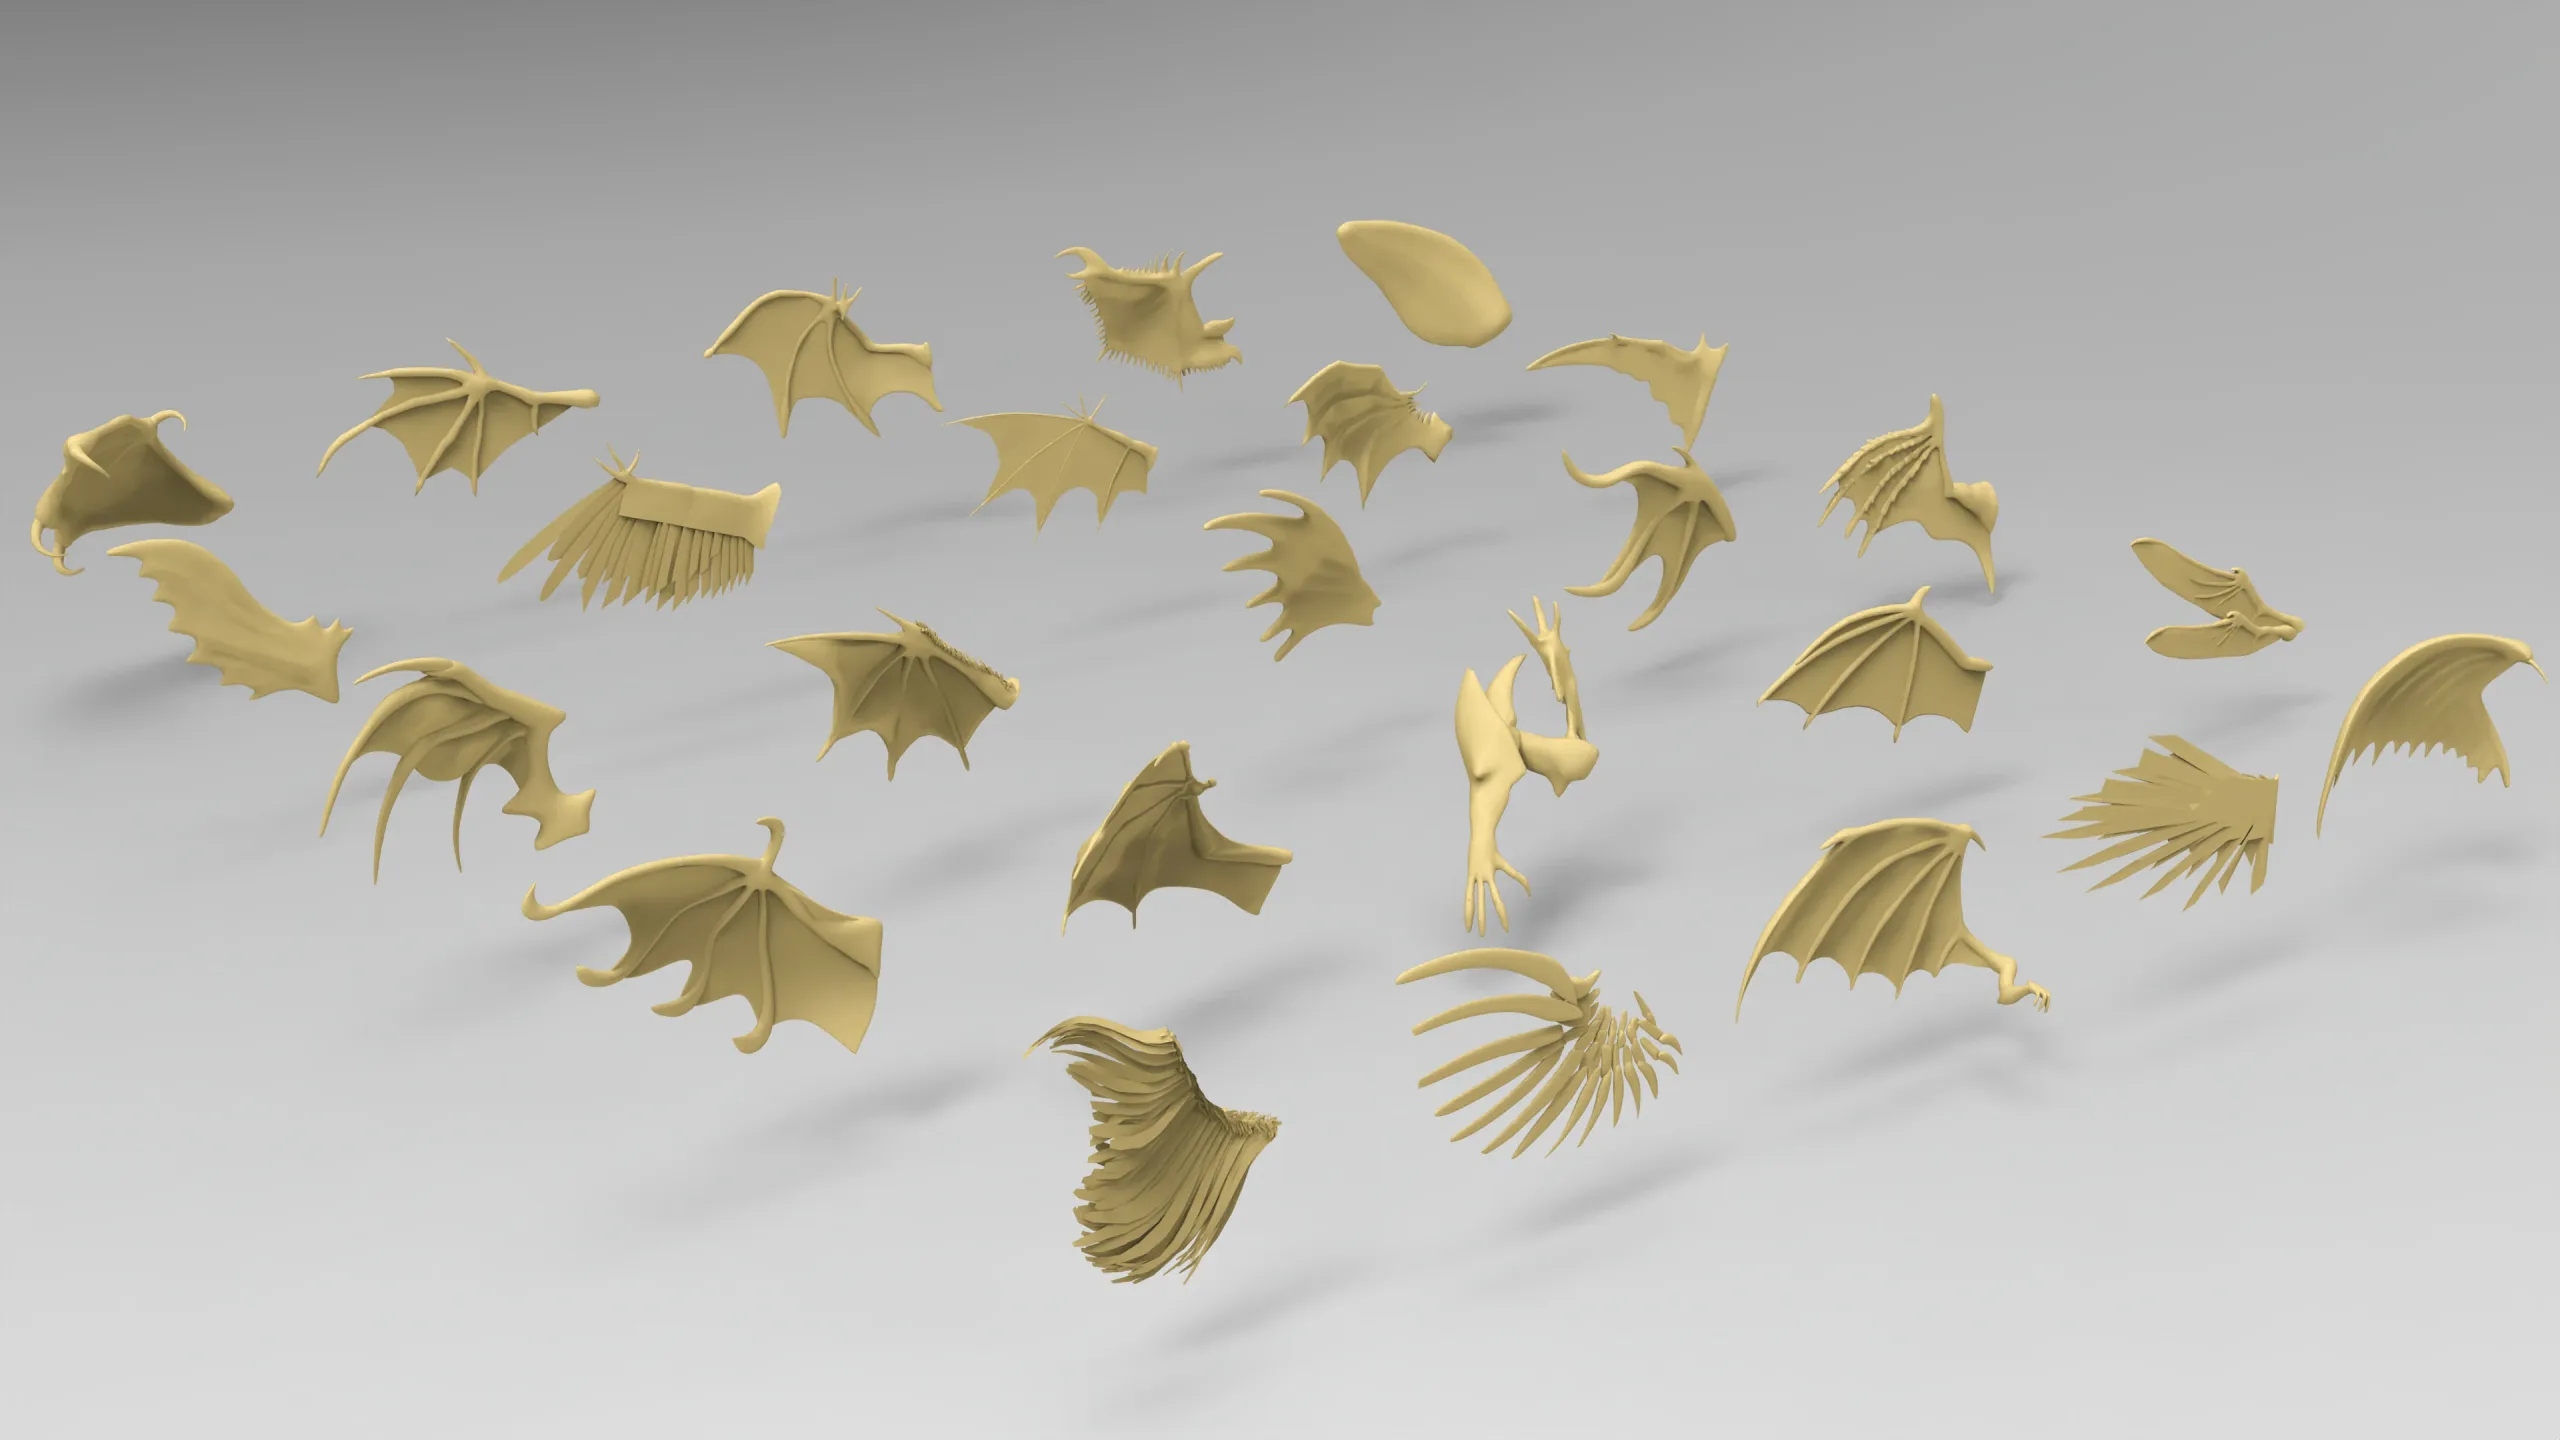 25 basemesh dragon wing collection 3